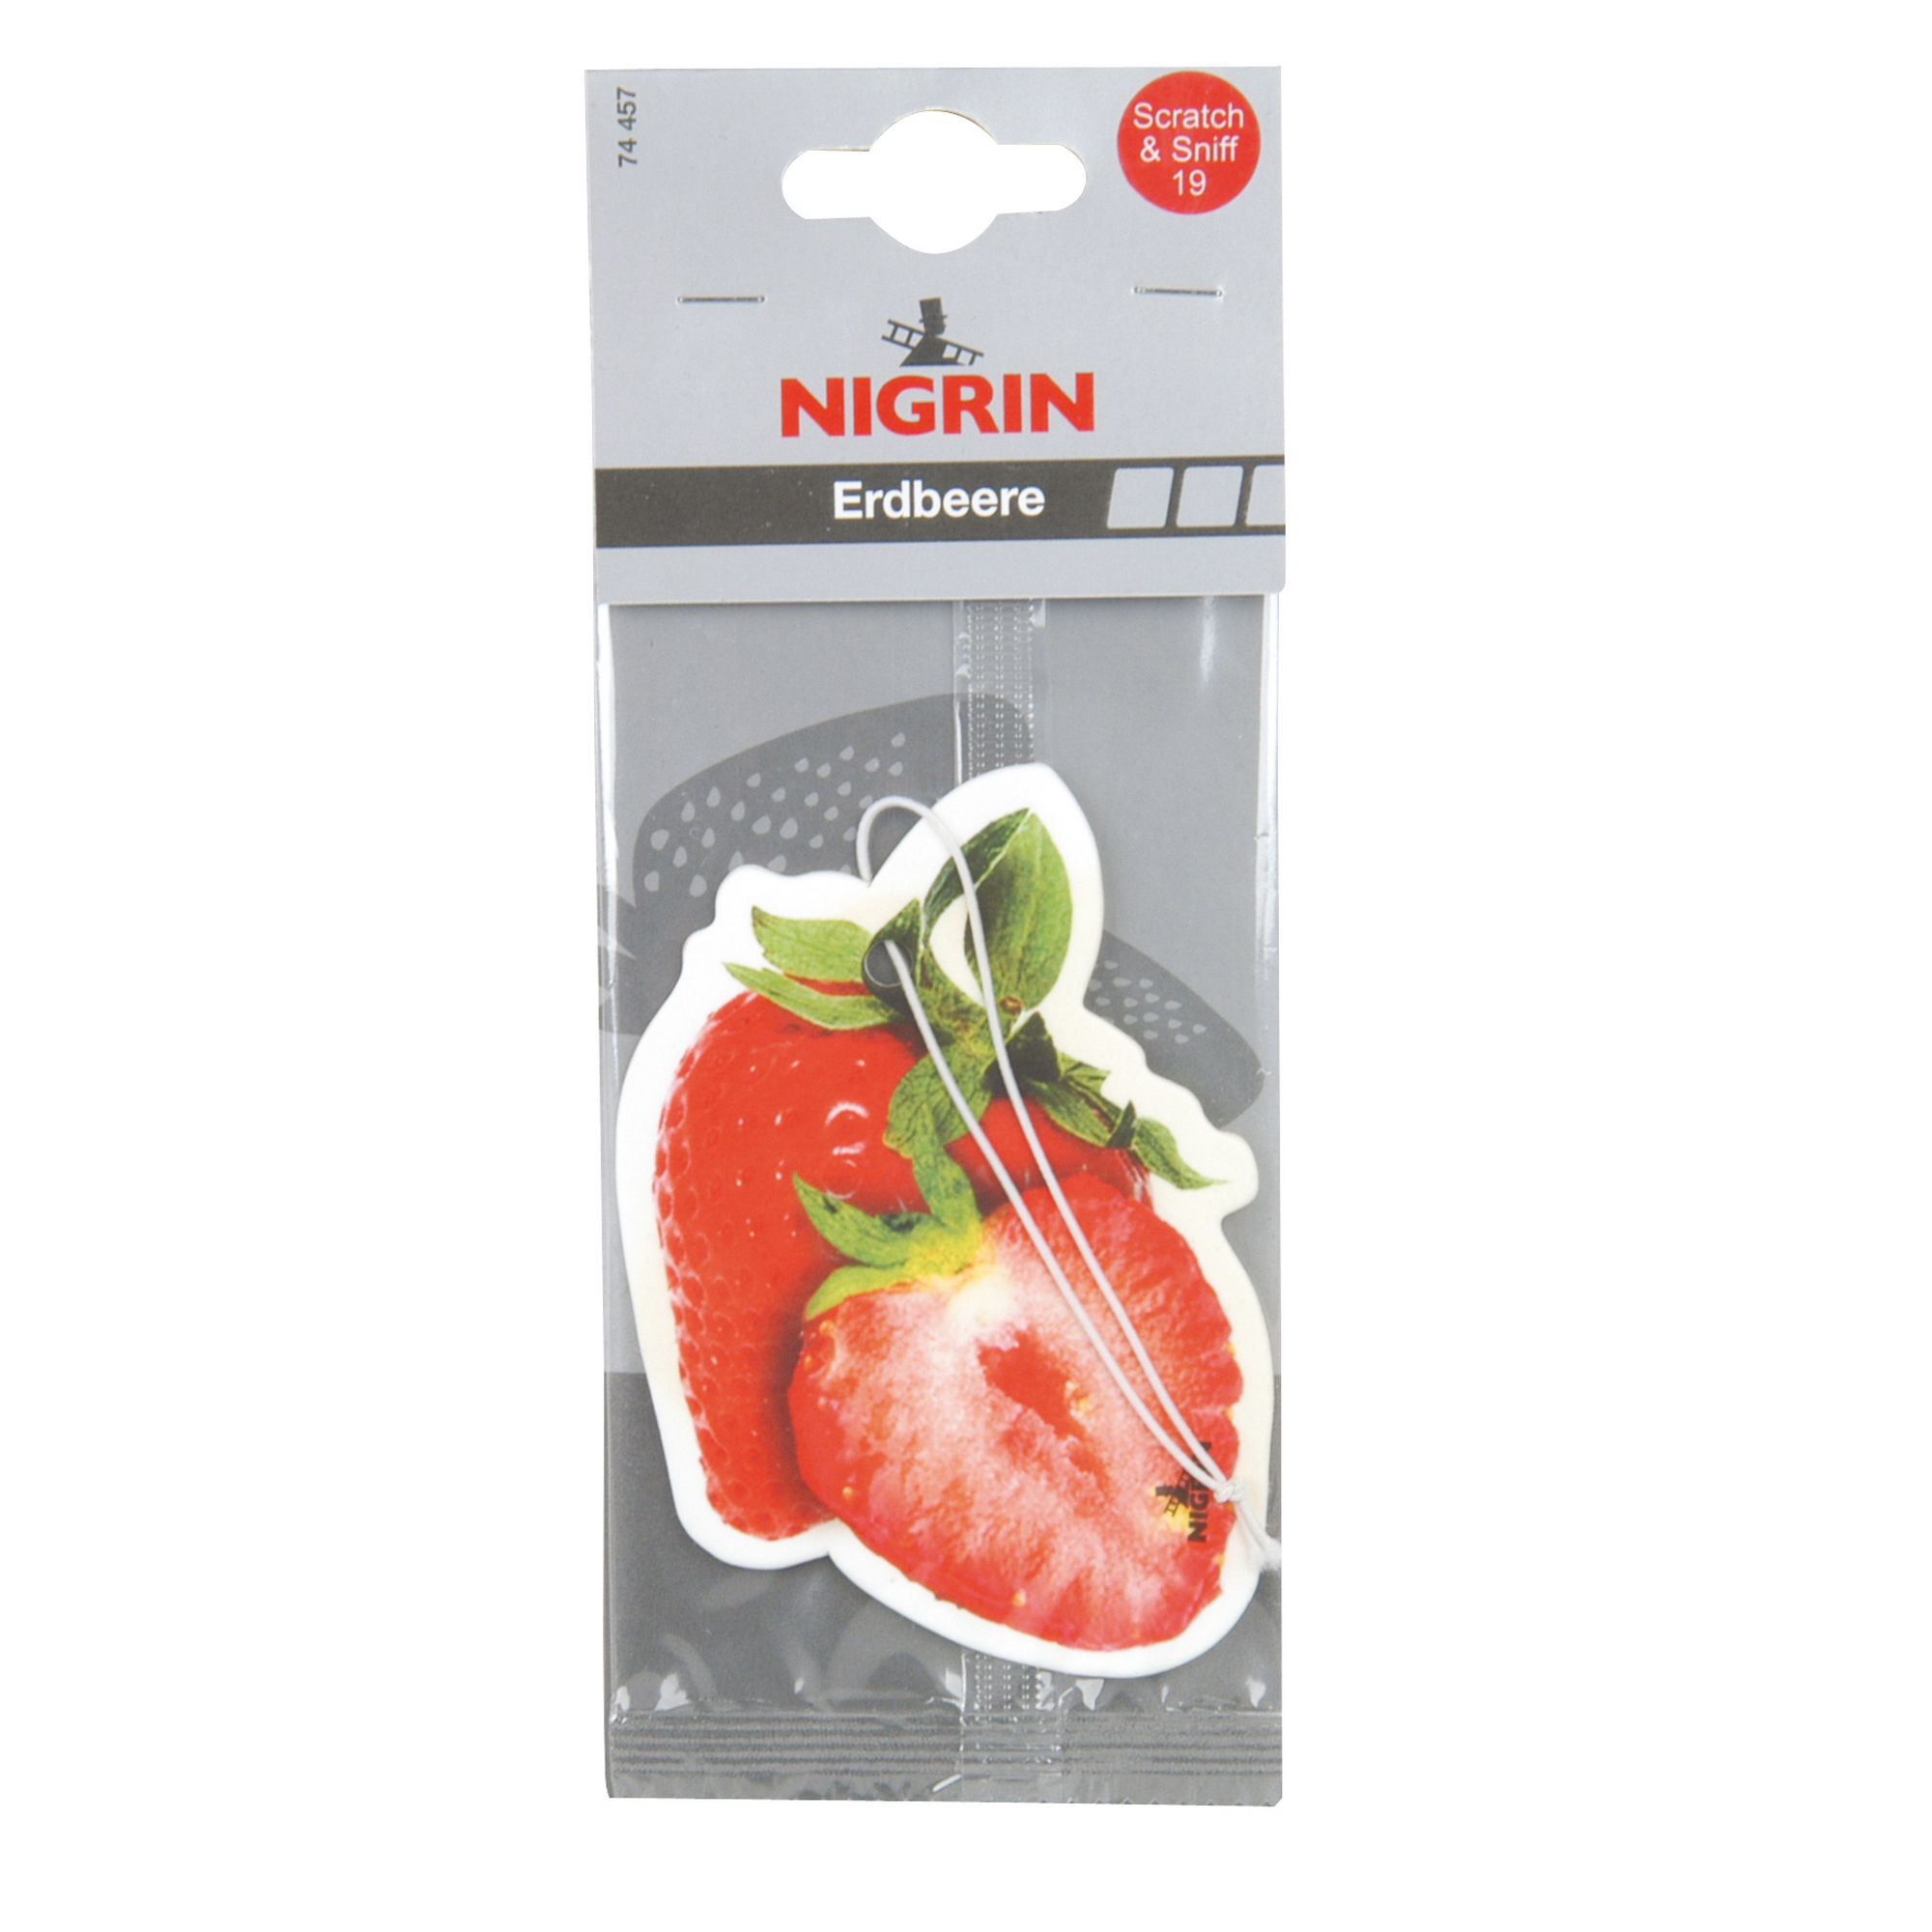 Lufterfrischer Erdbeere Nigrin + product picture